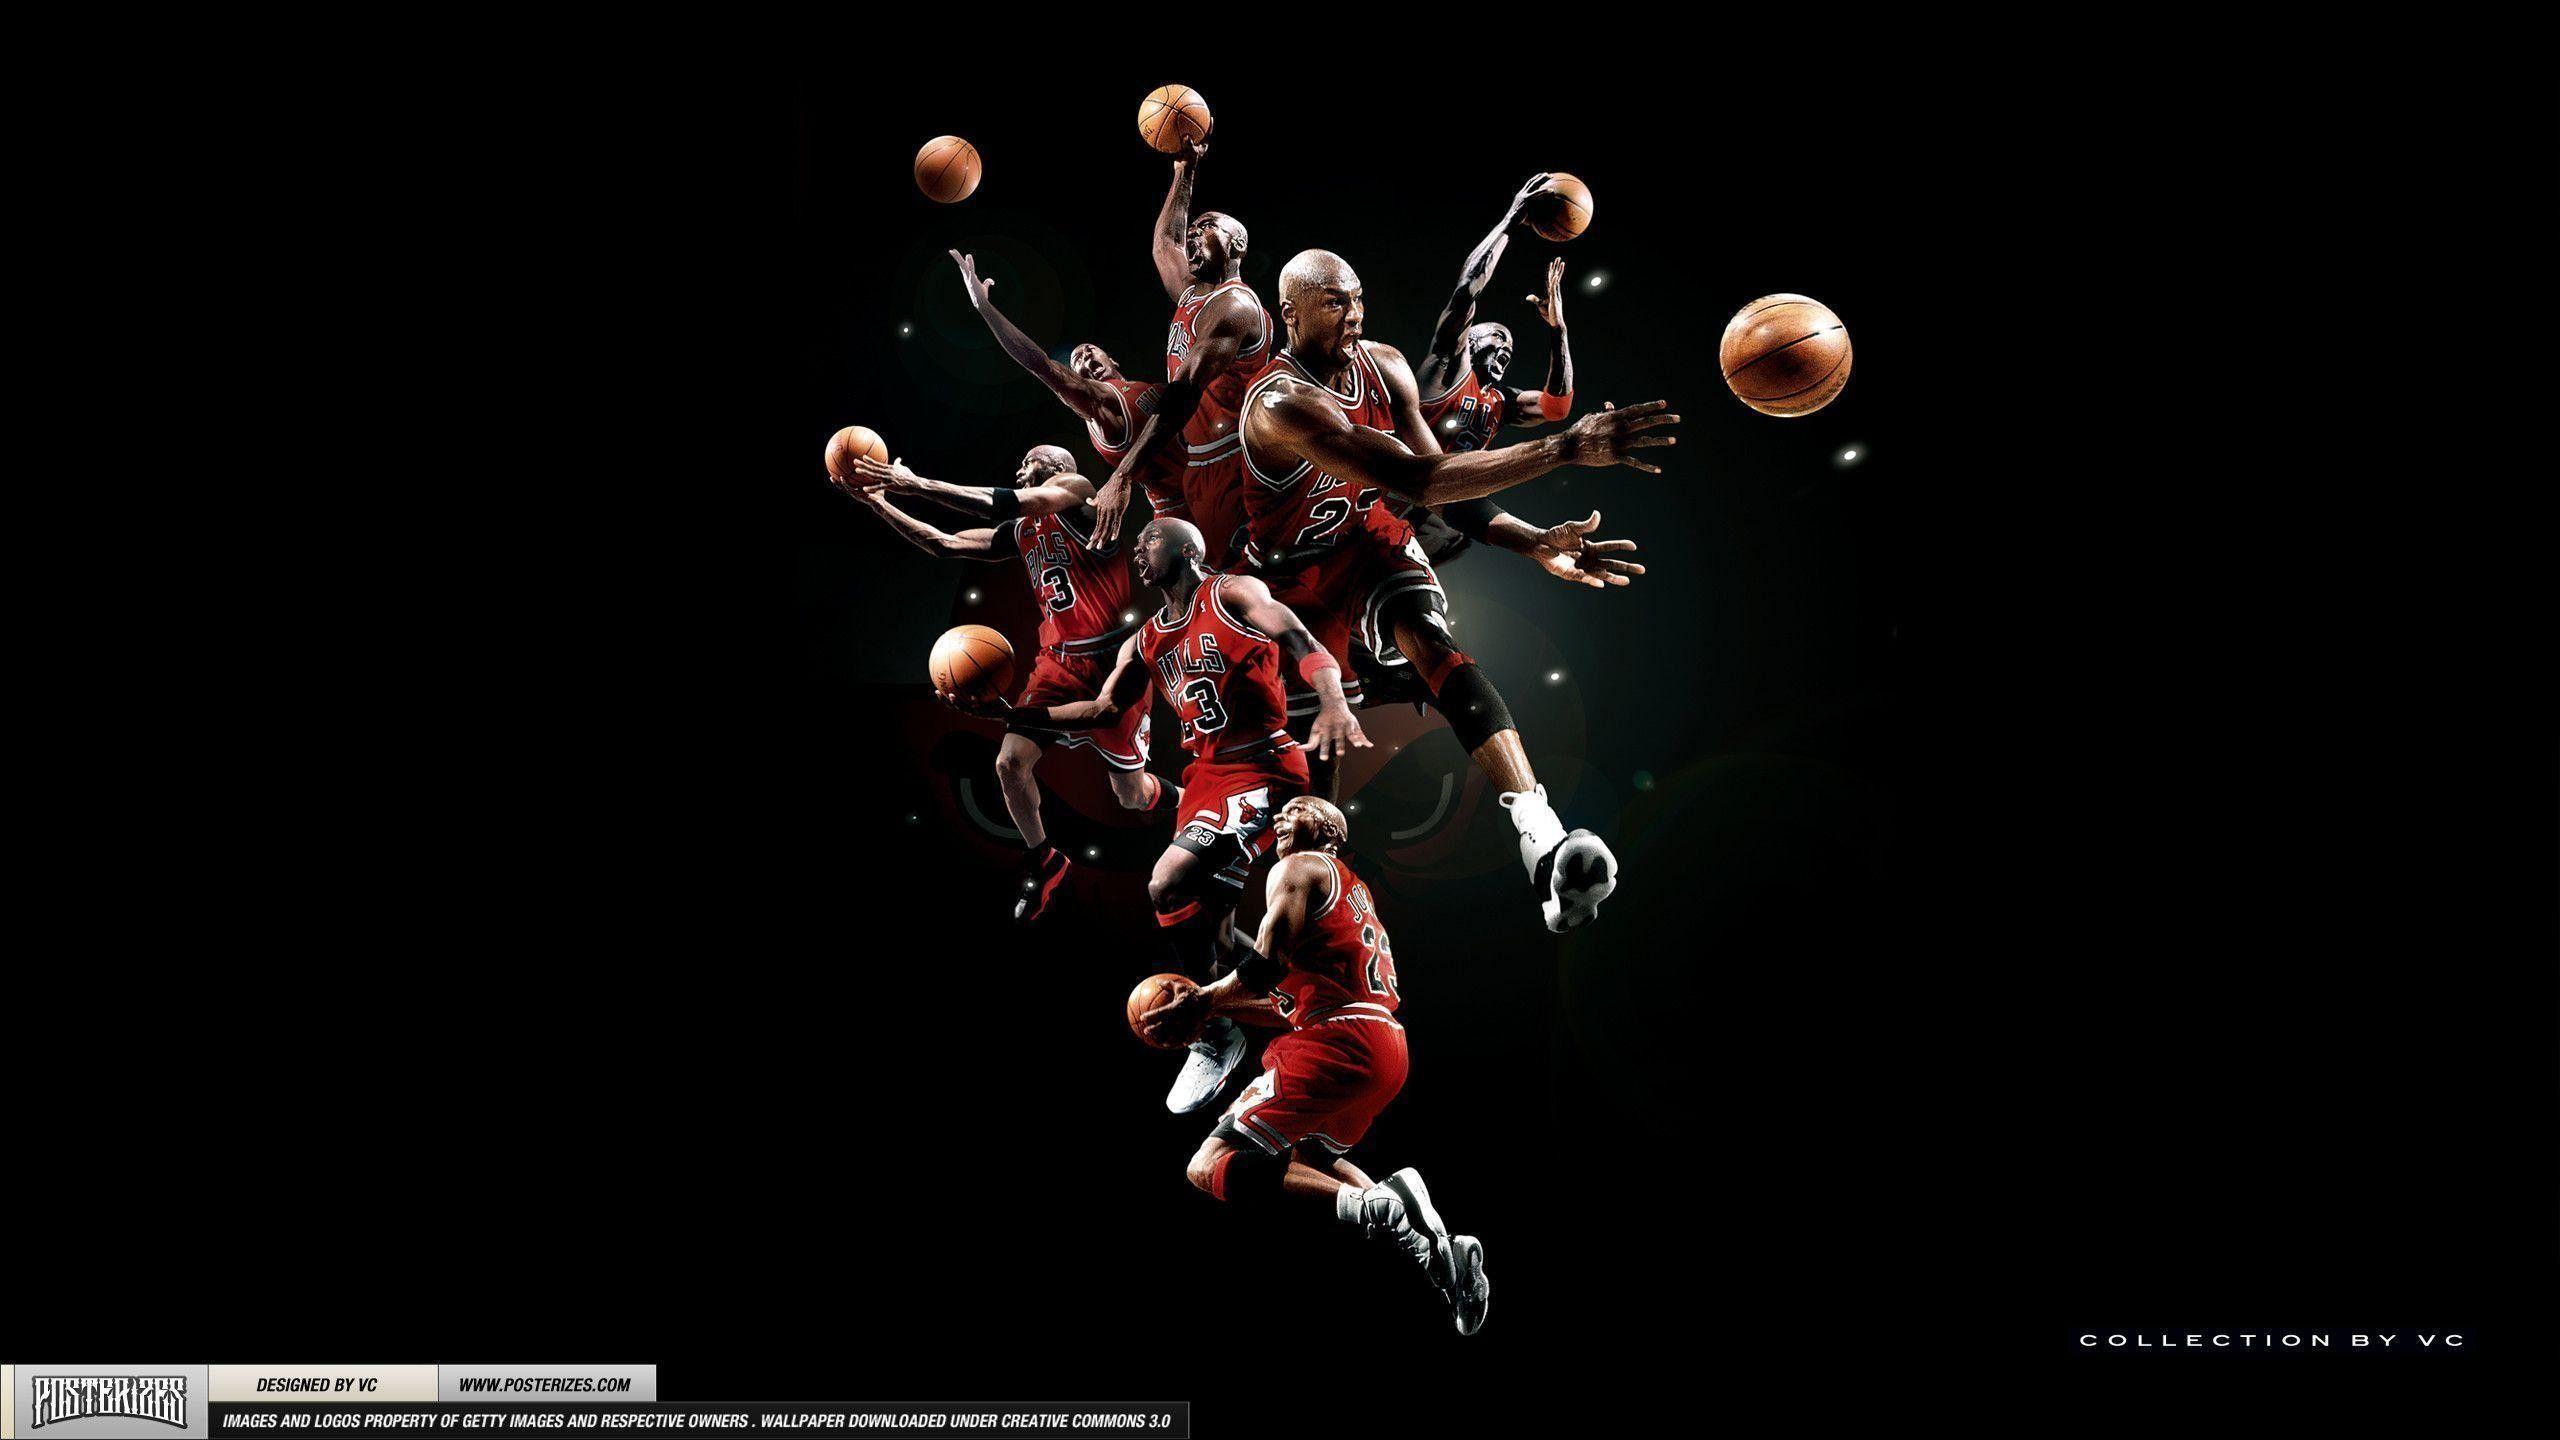 HD Michael Jordan Wallpaper